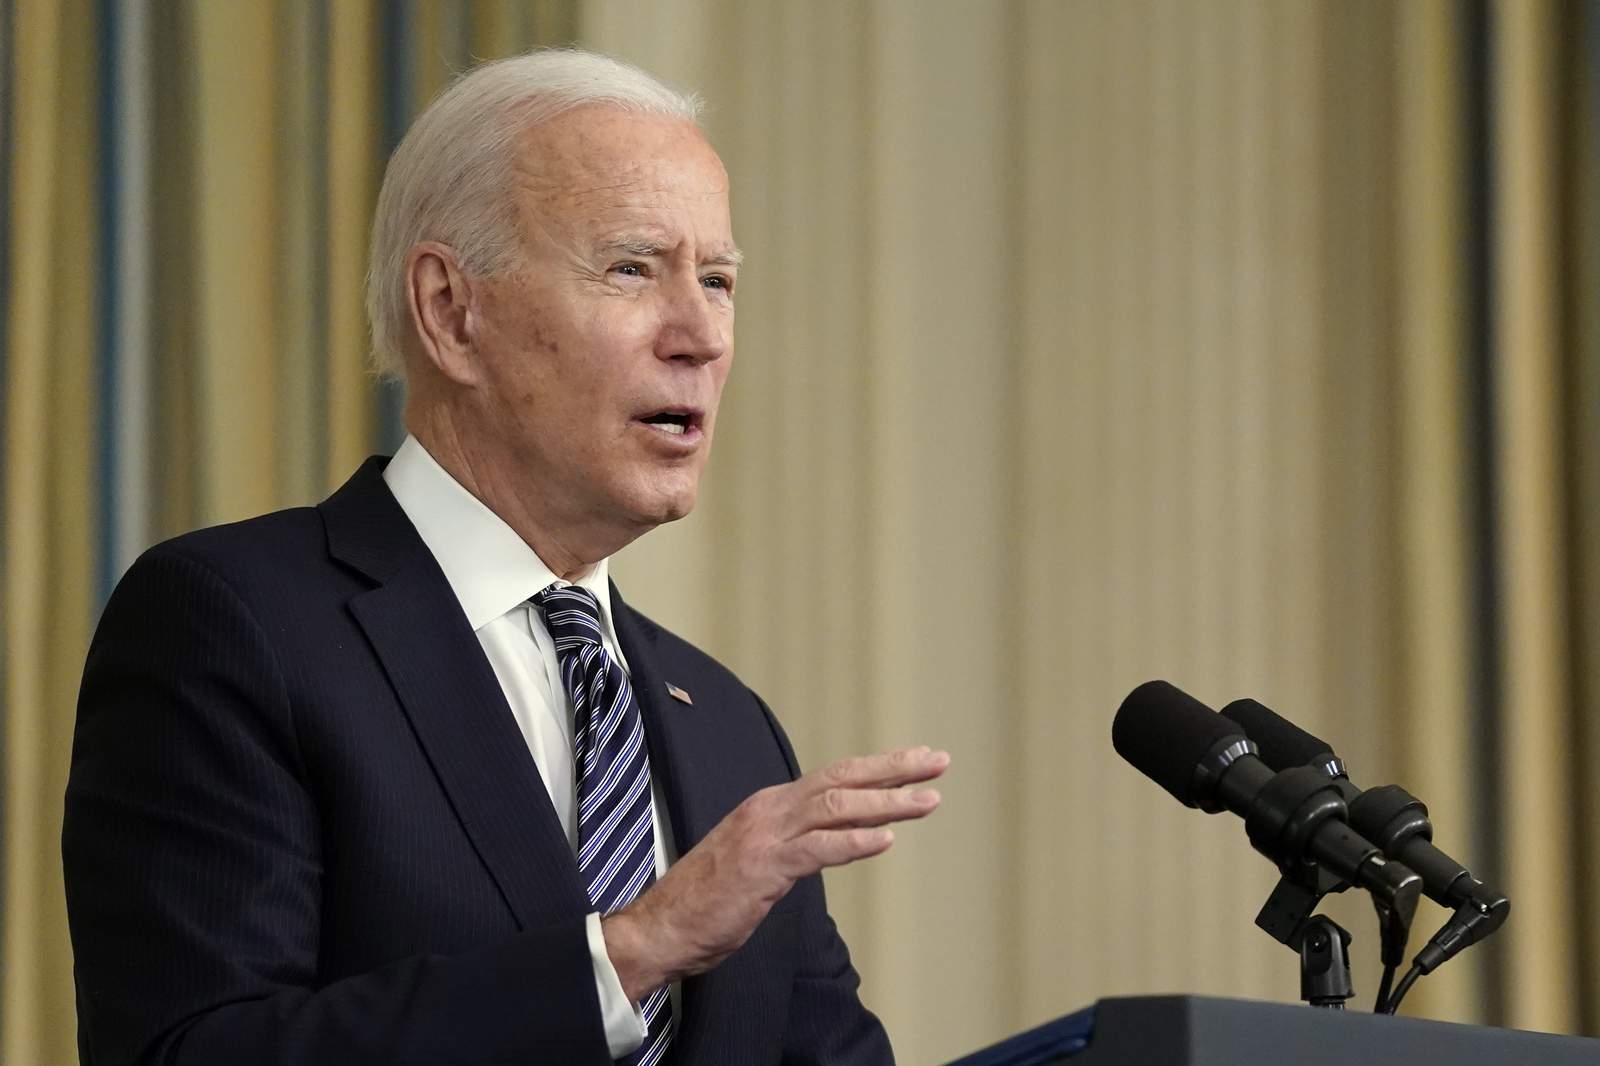 President Biden, others promote $1,400 direct payments in coronavirus relief plan